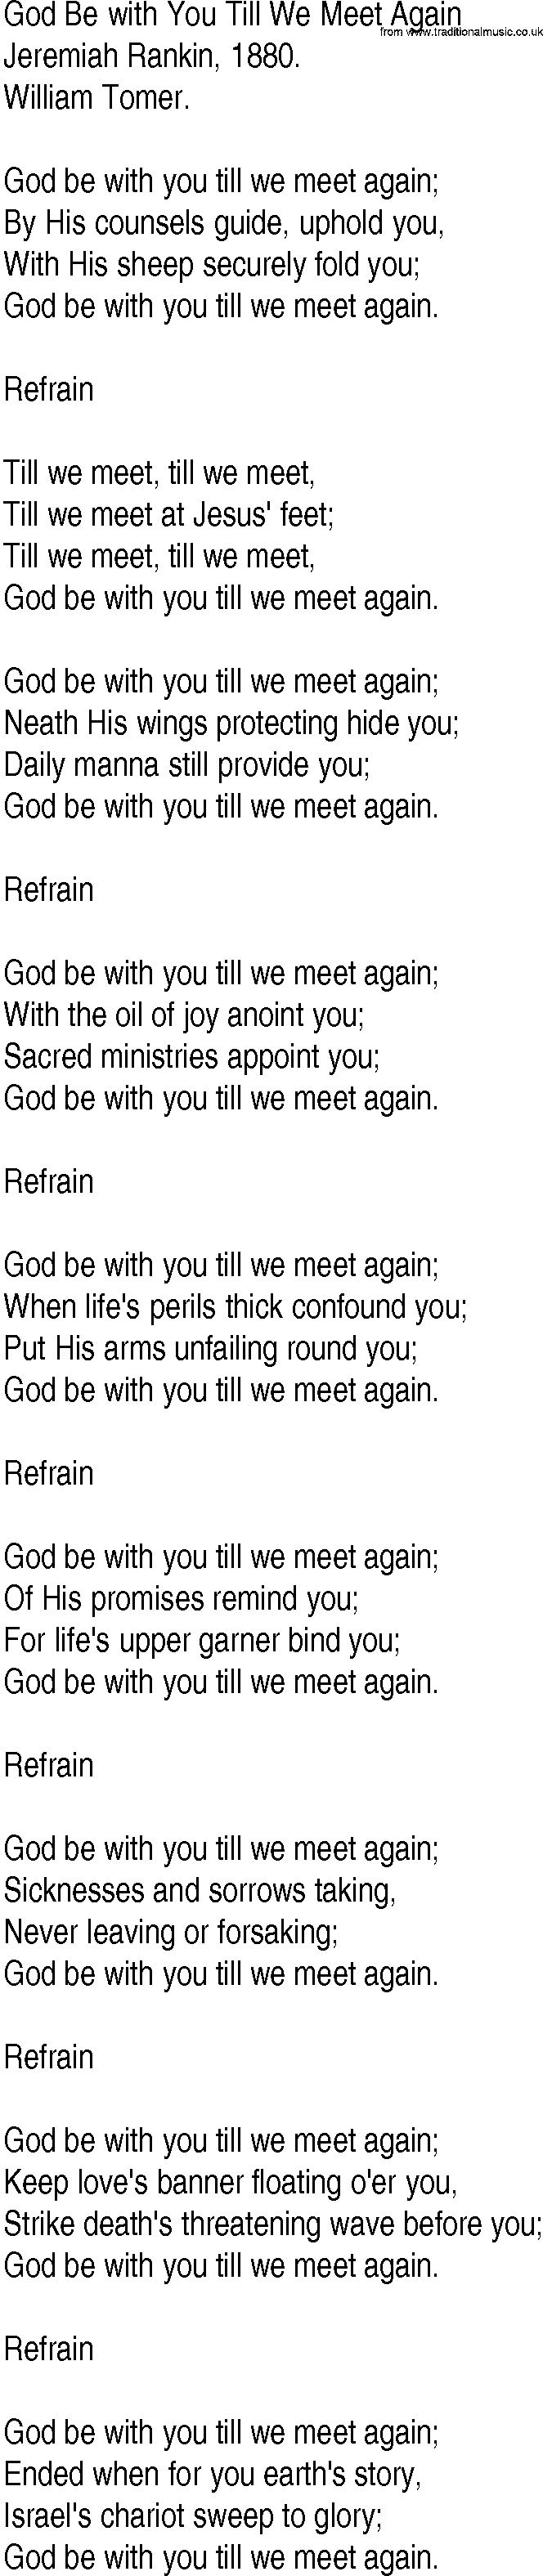 Hymn and Gospel Song: God Be with You Till We Meet Again by Jeremiah Rankin lyrics